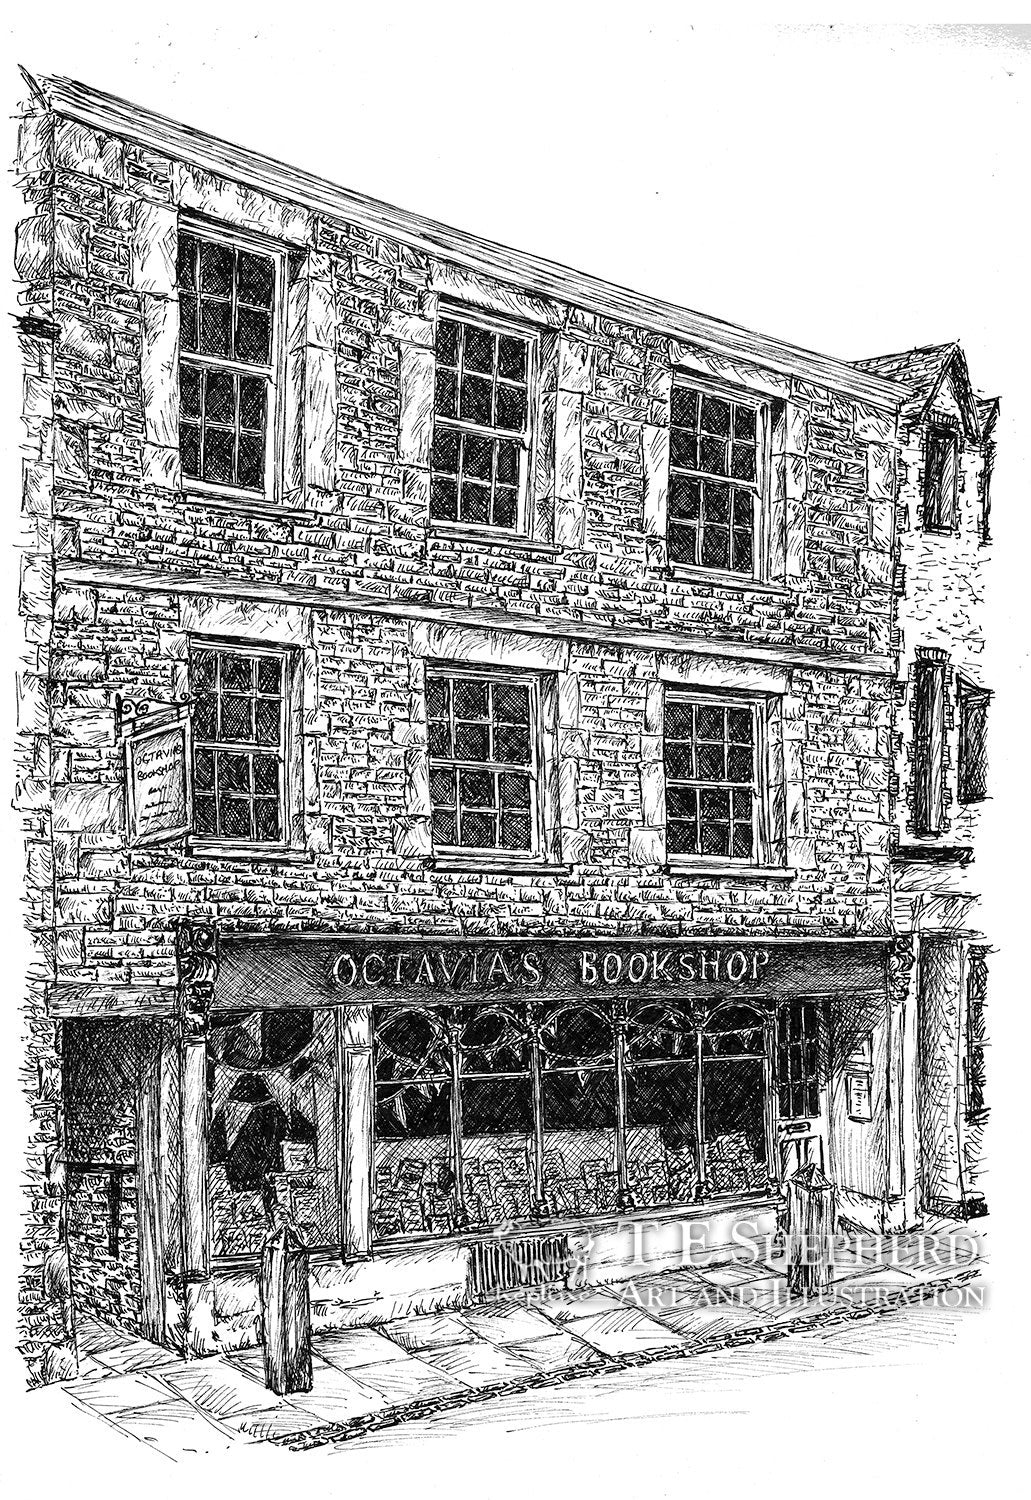 Octavia's Bookshop, Cirencester *Original*